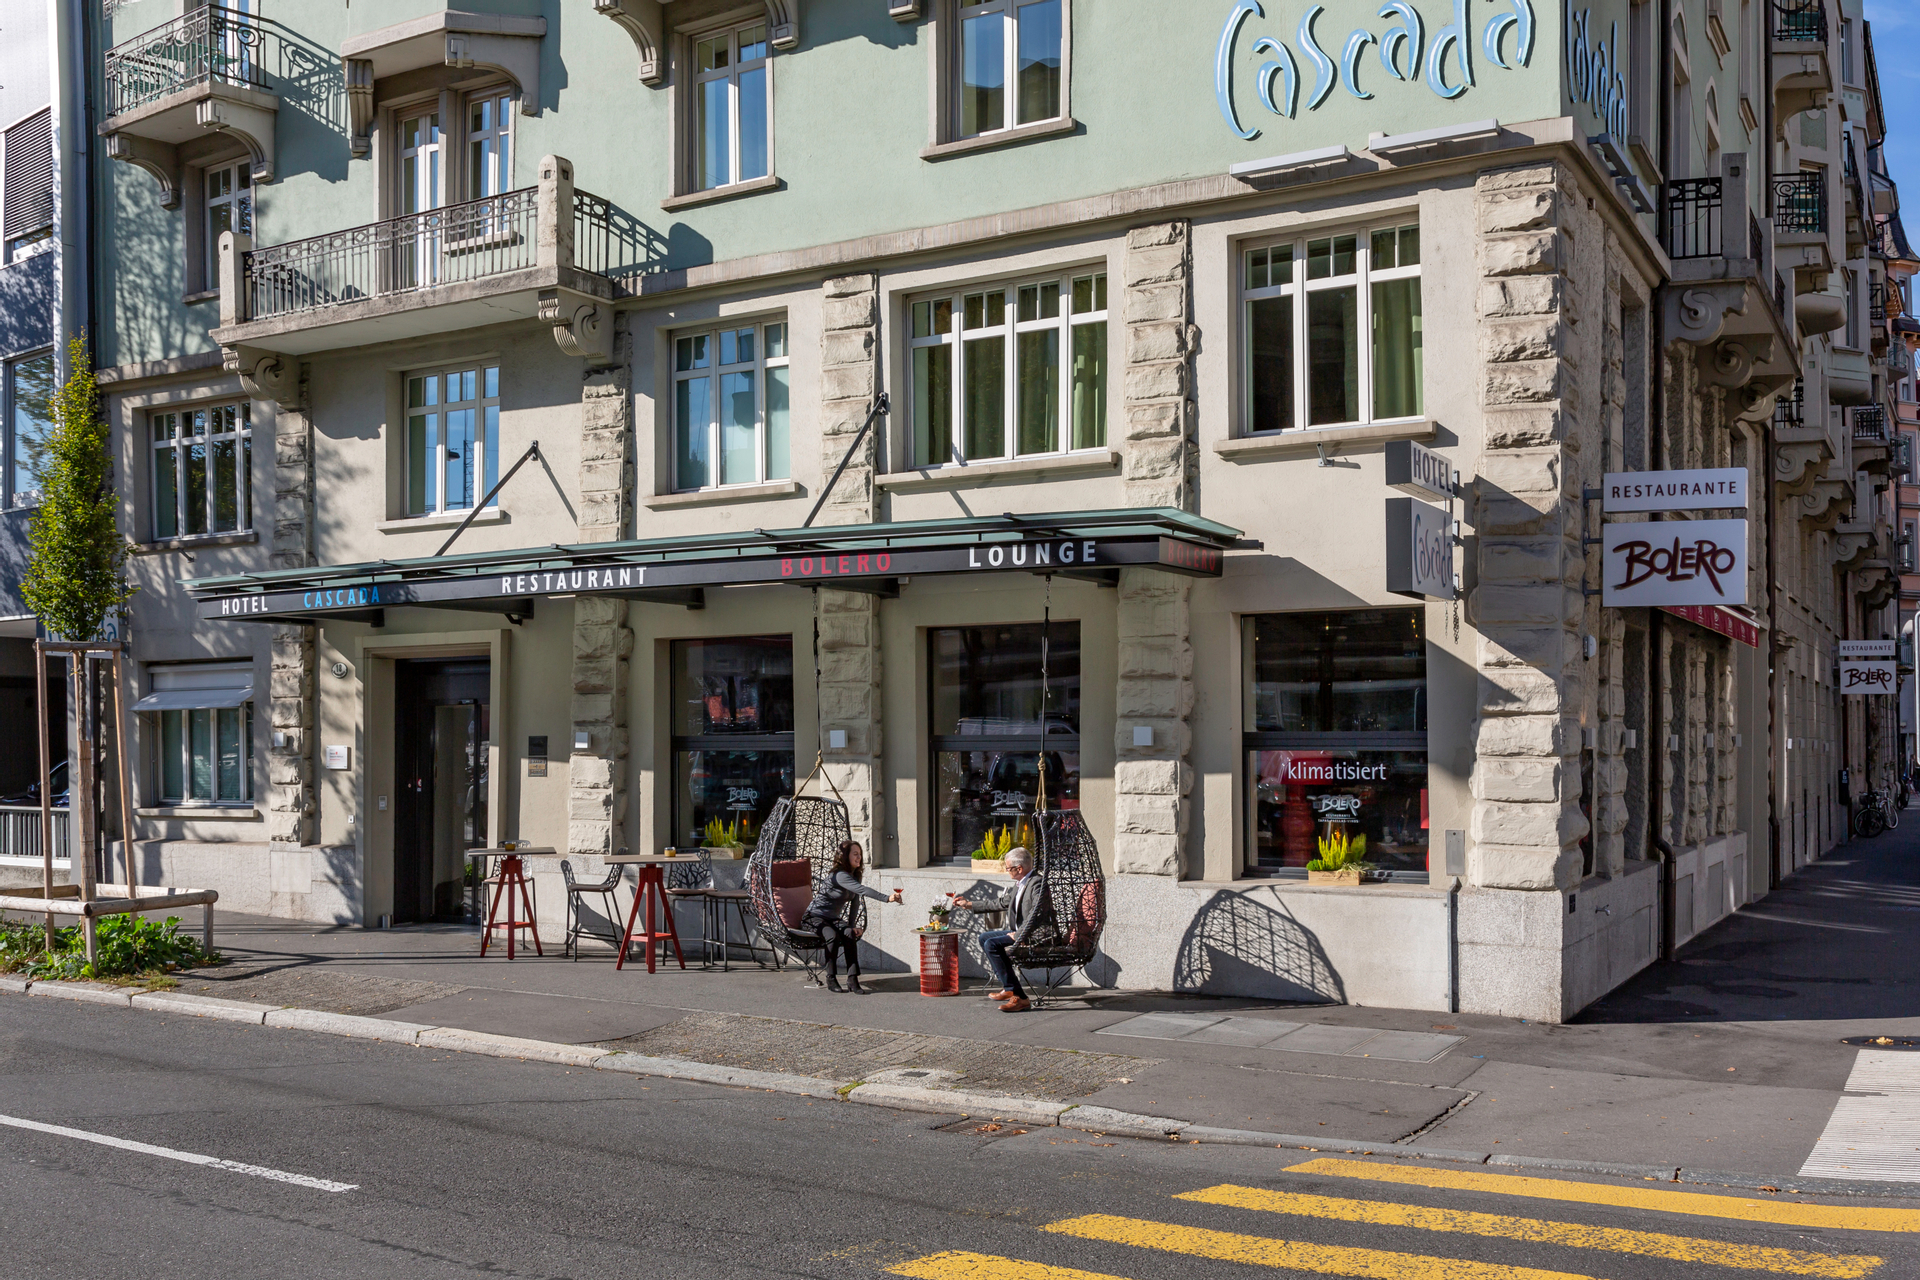 Exterior & Views 2, Cascada Boutique Hotel, Luzern